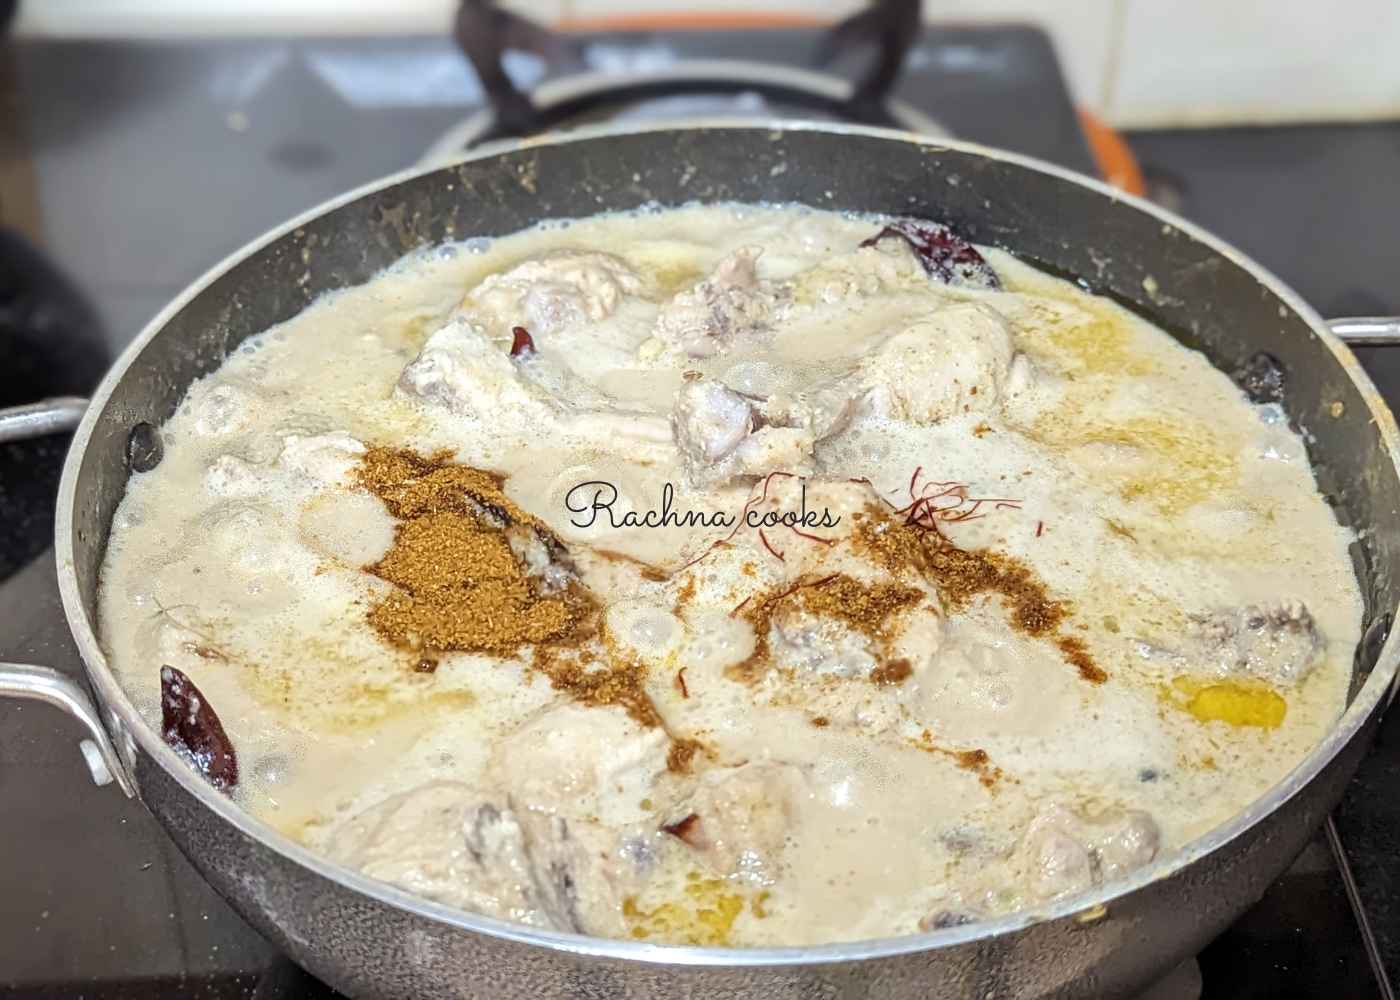 Garam masala, saffron strands and kewra water added to the chicken curry.